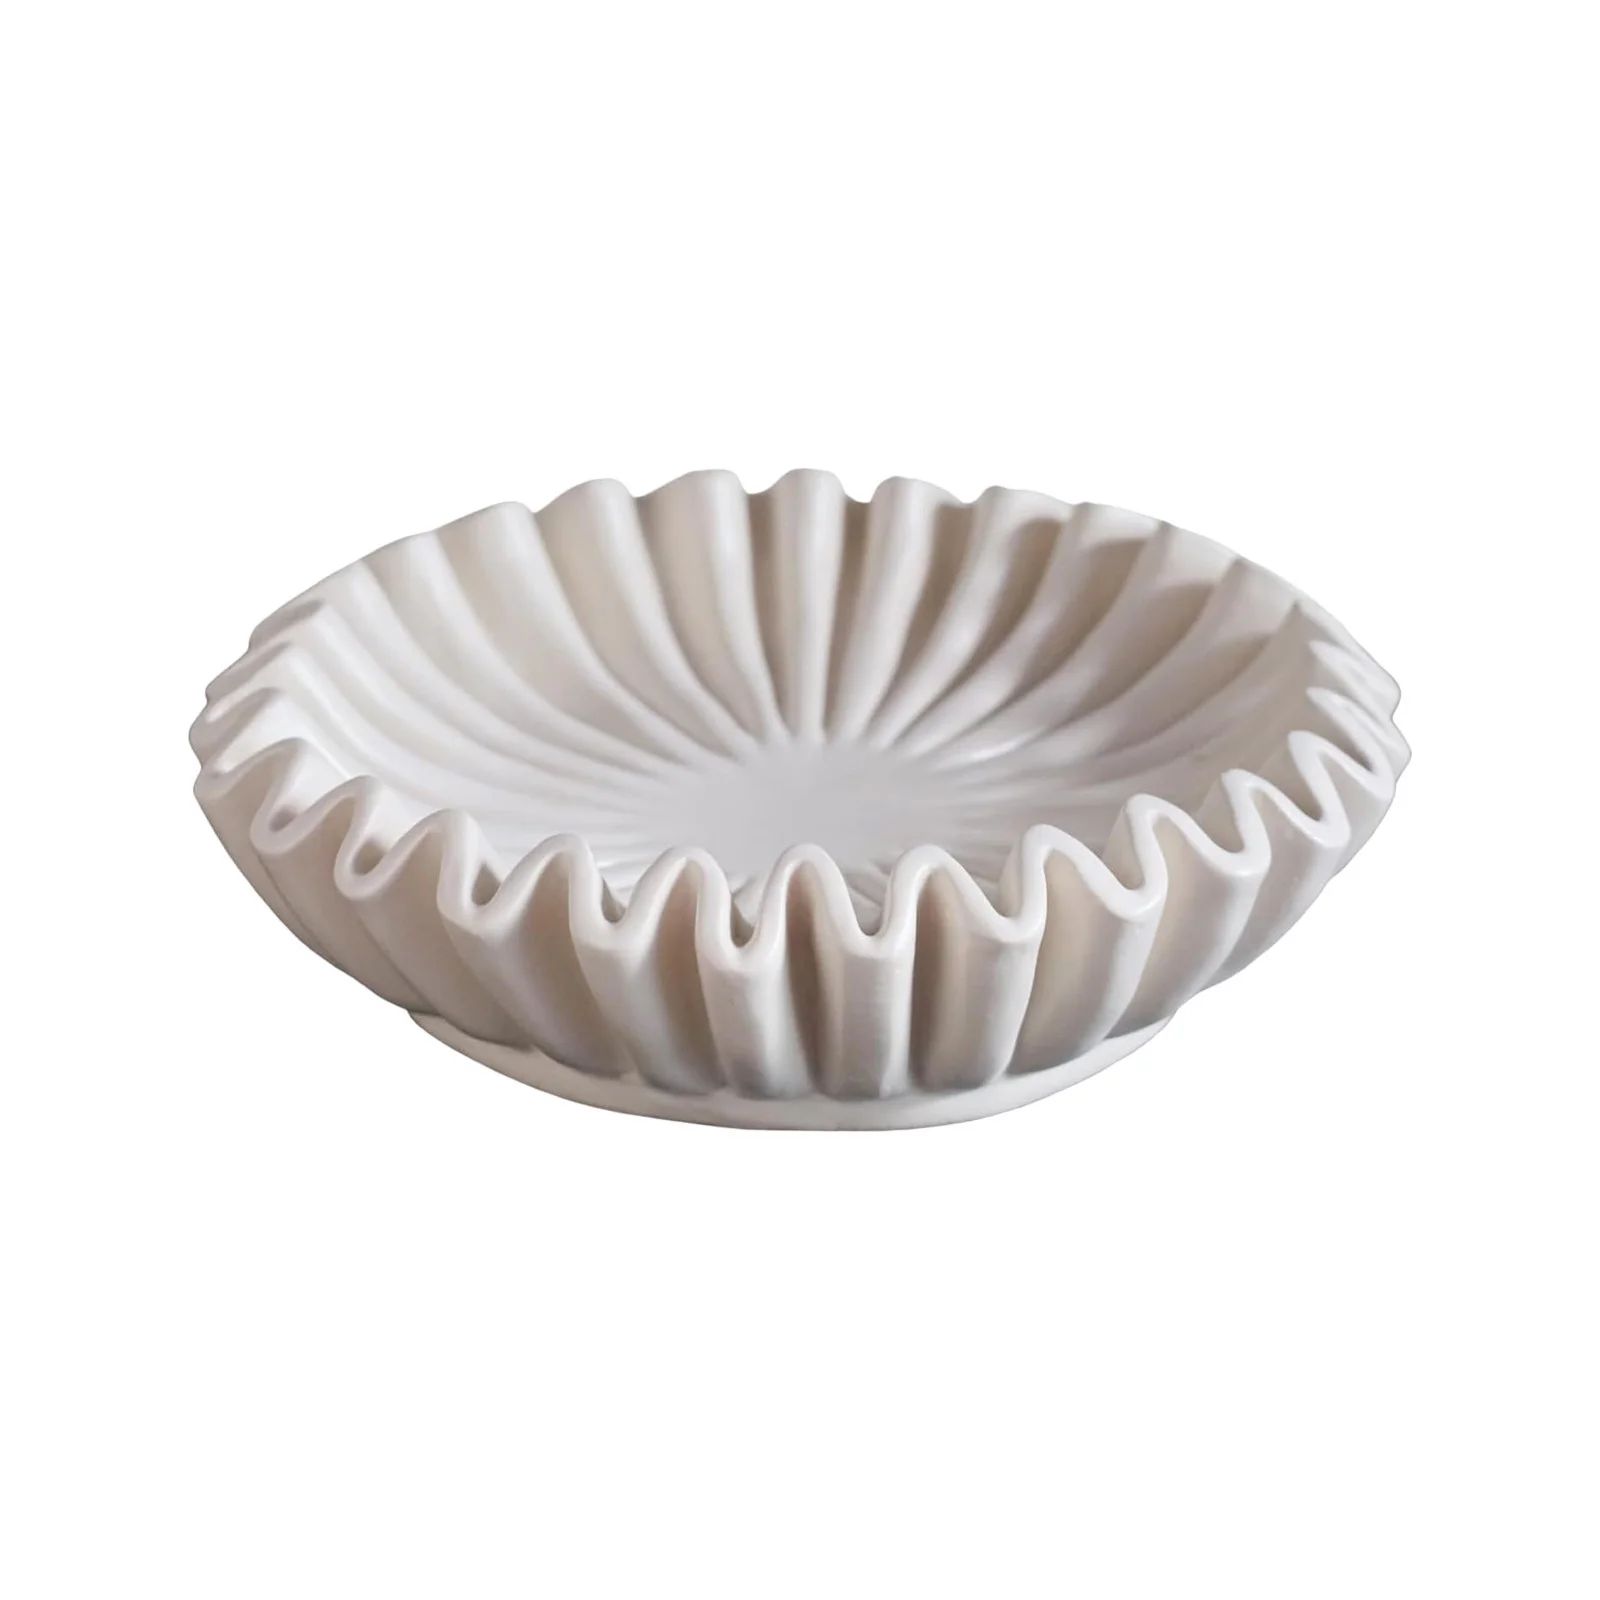 WANYR Large Decorative Bowl - White Decorative Bowls for Home Decor - Organic Modern Home Decor B... | Walmart (US)